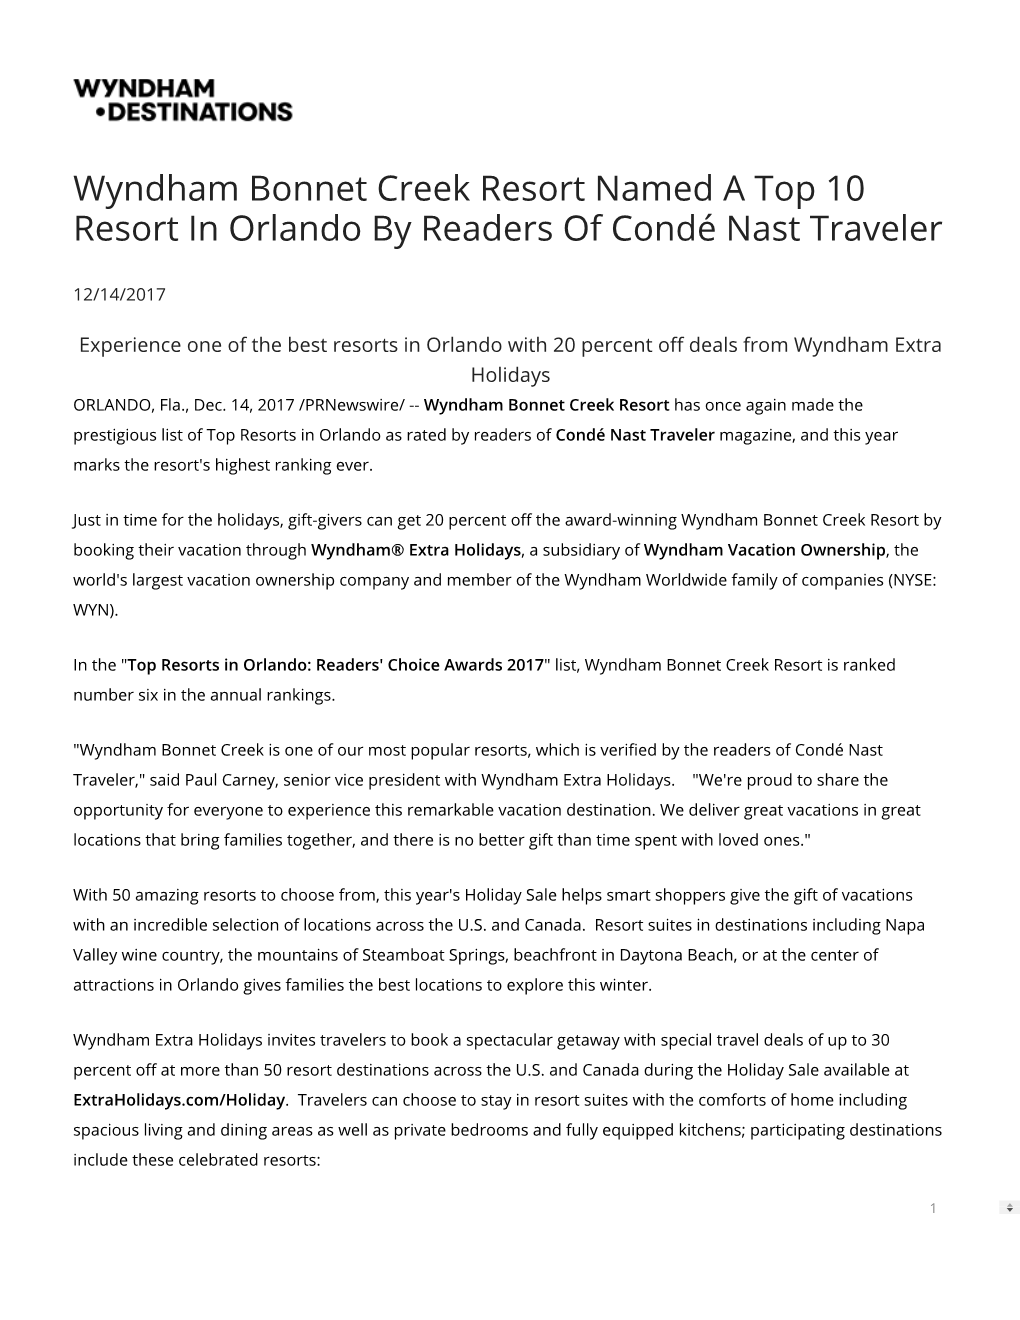 Wyndham Bonnet Creek Resort Named a Top 10 Resort in Orlando by Readers of Condé Nast Traveler